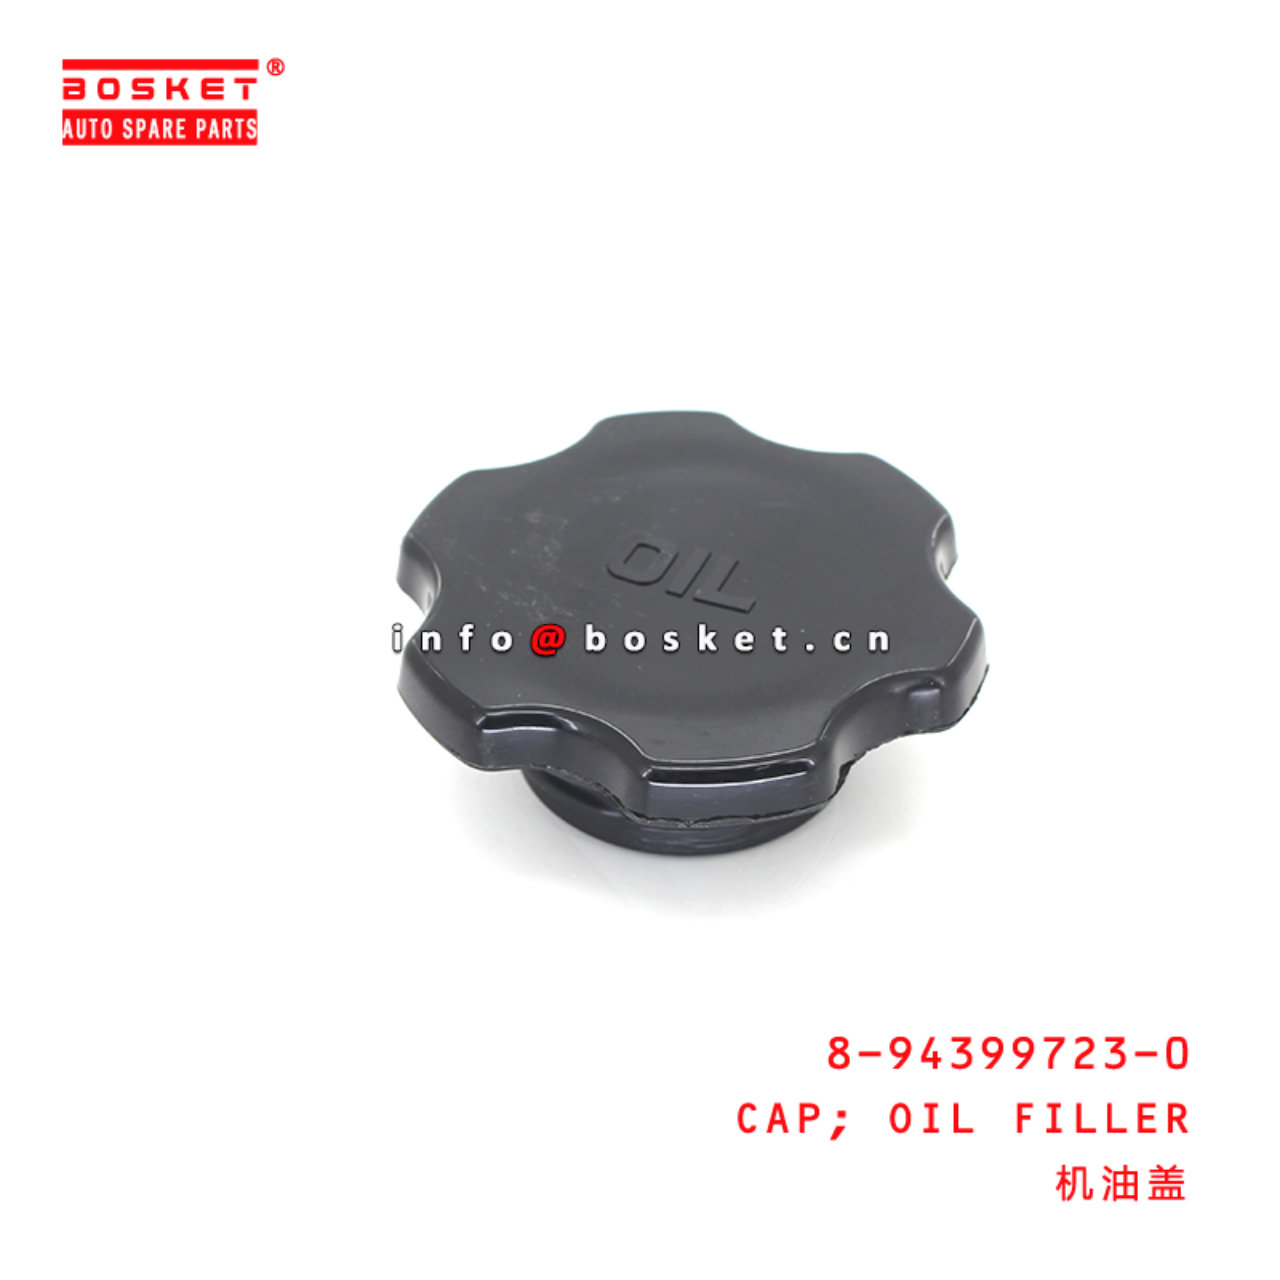 8-94399723-0 Oil Filler Cap suitable for ISUZU FVZ34 VC46 6HK1 6UZ1 8943997230